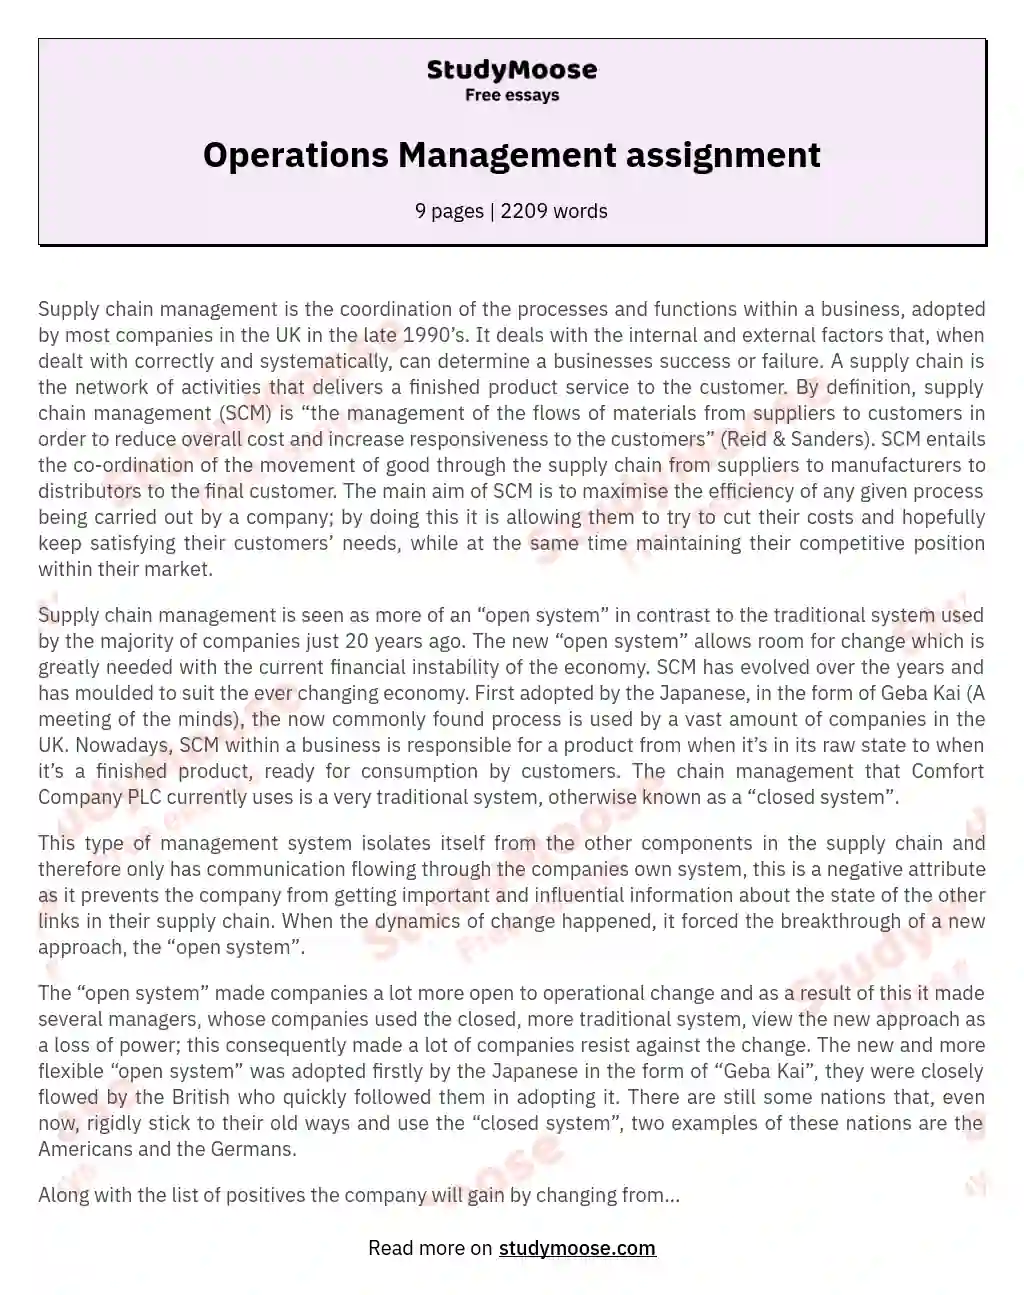 Operations Management assignment essay